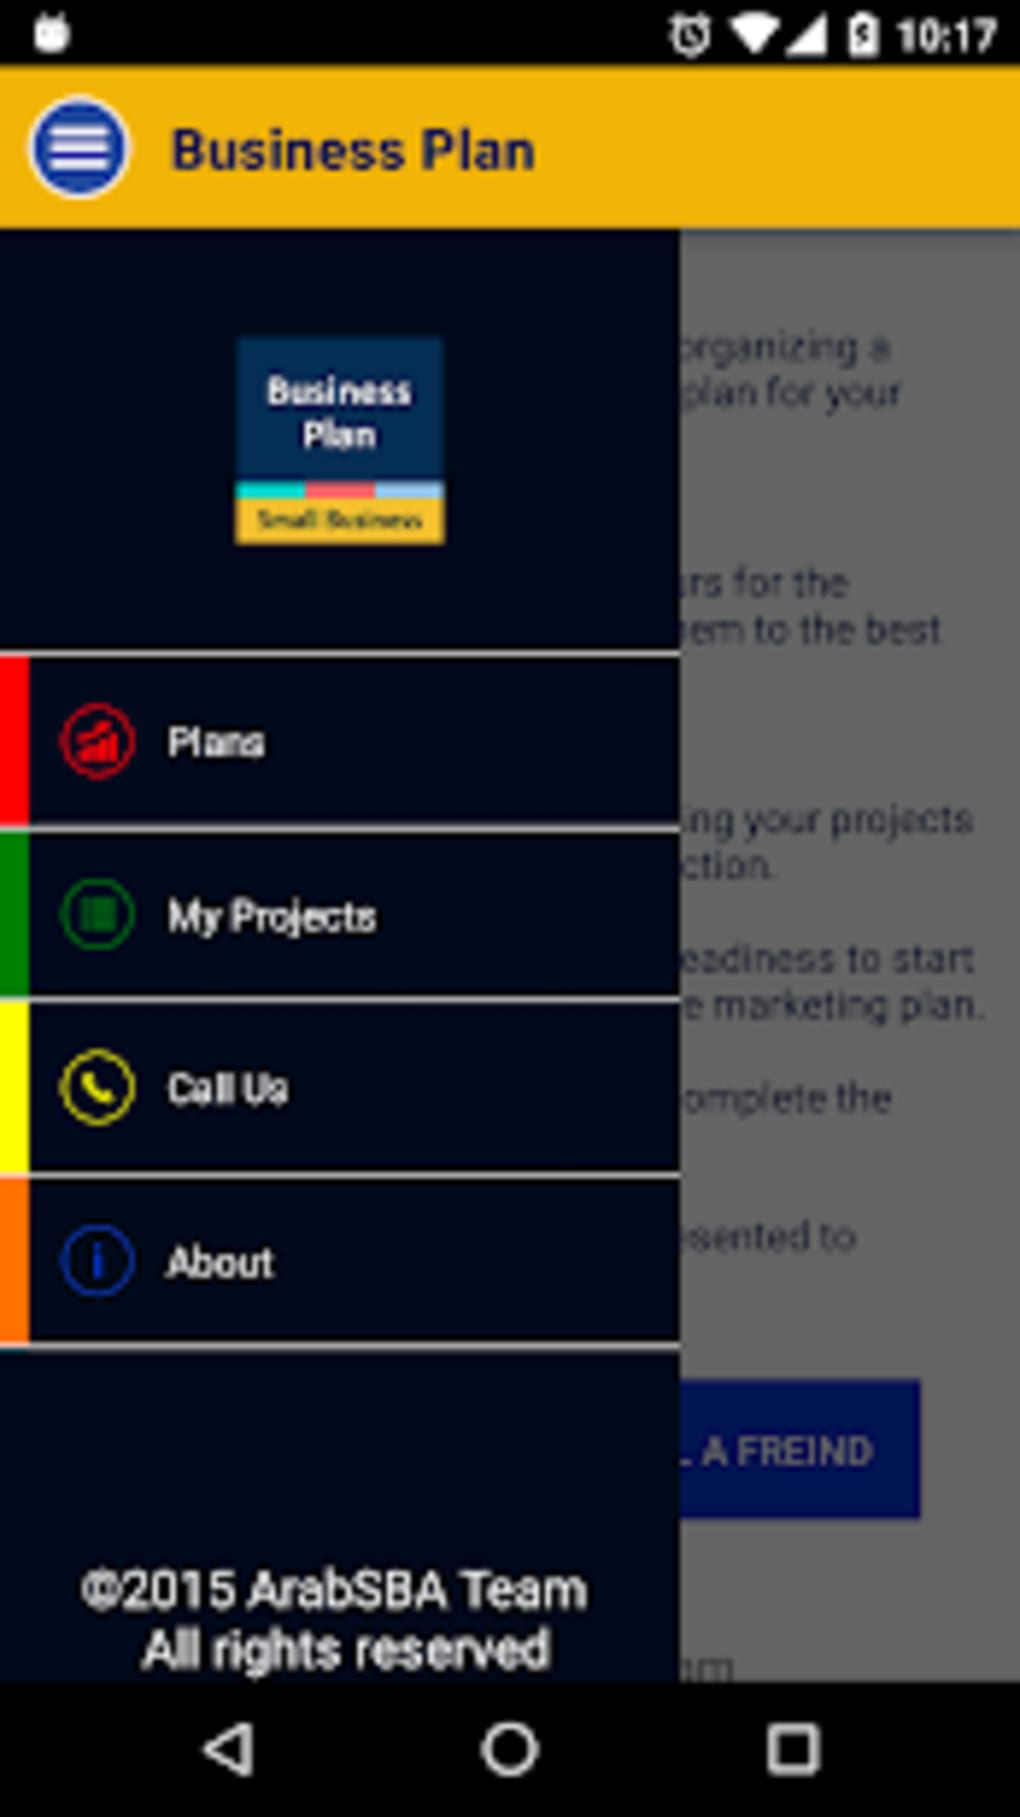 business plan apk download